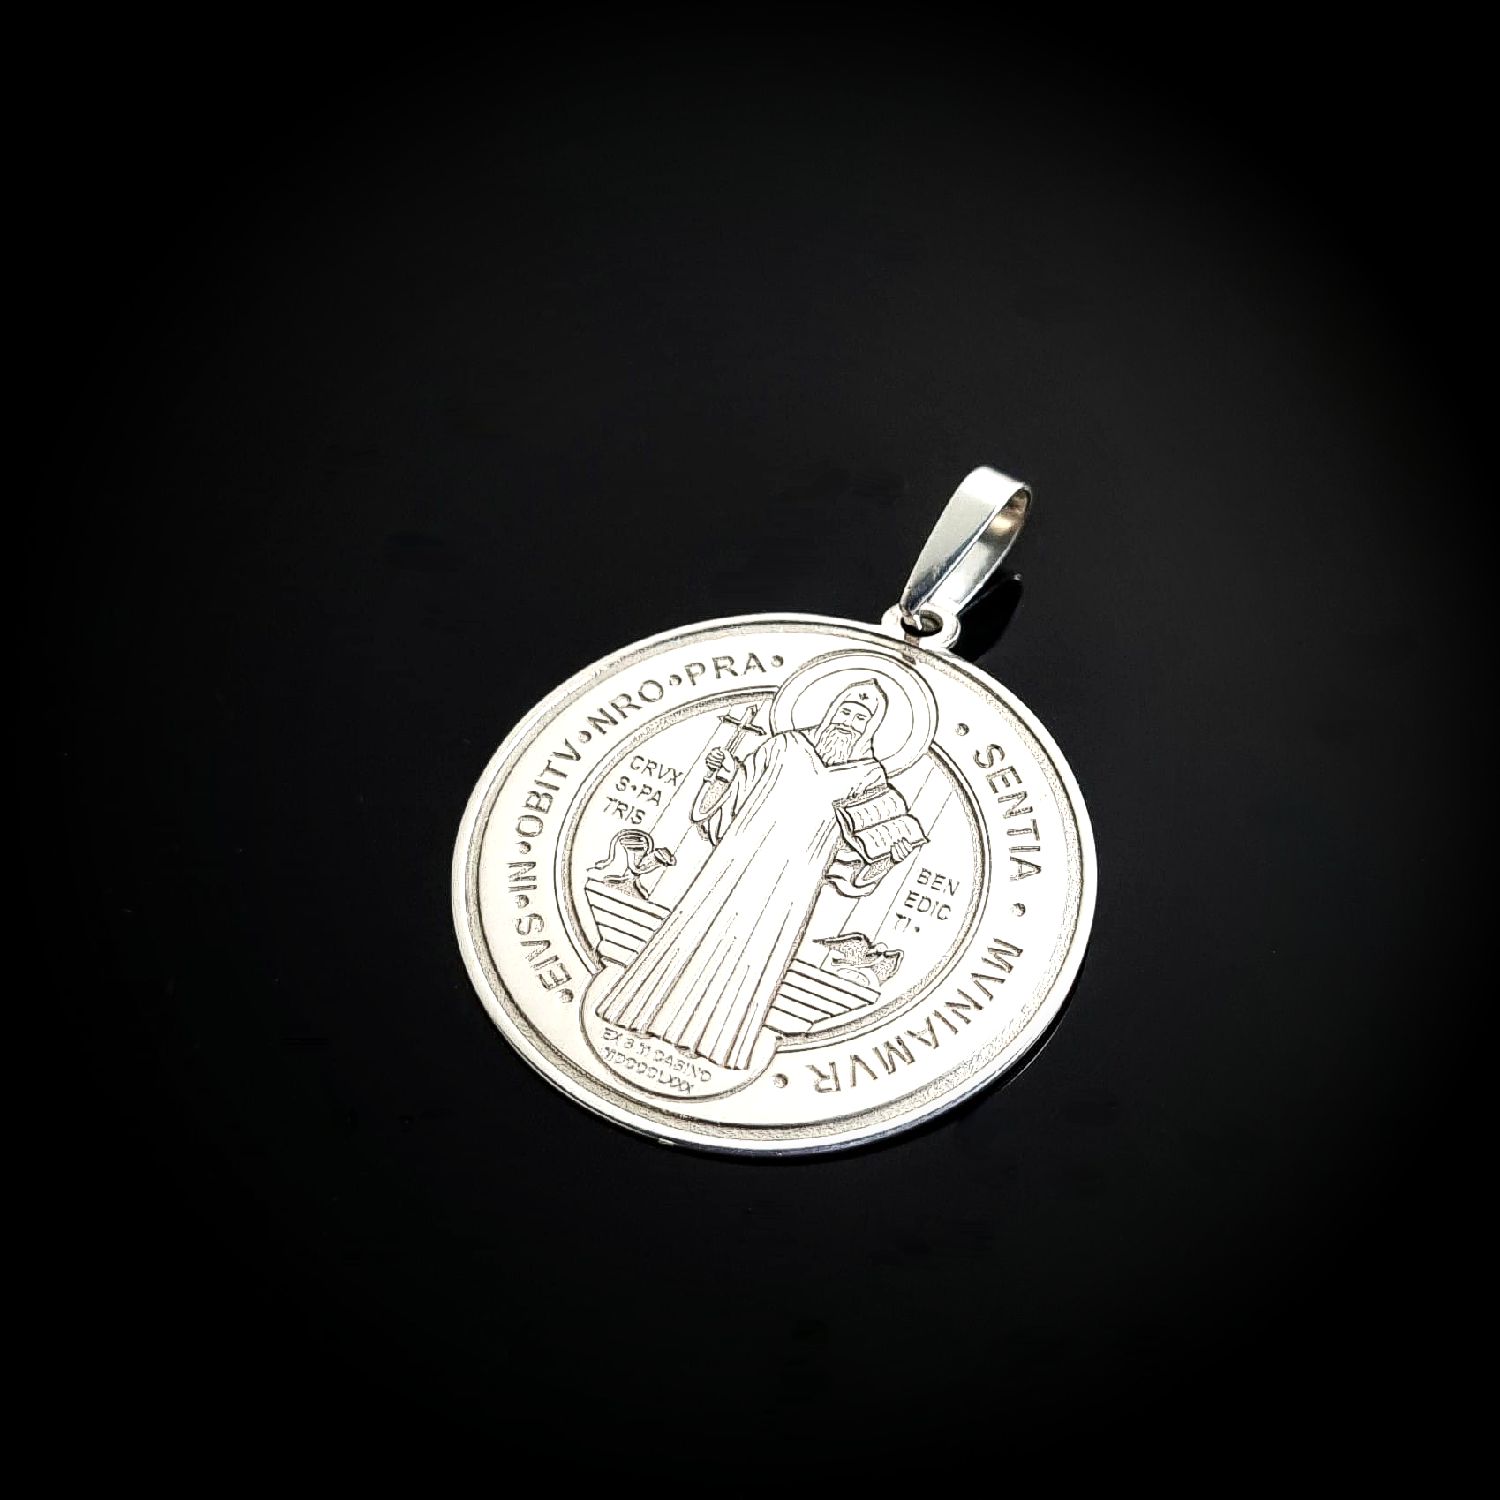 Strieborná medaila sv. Benedikta